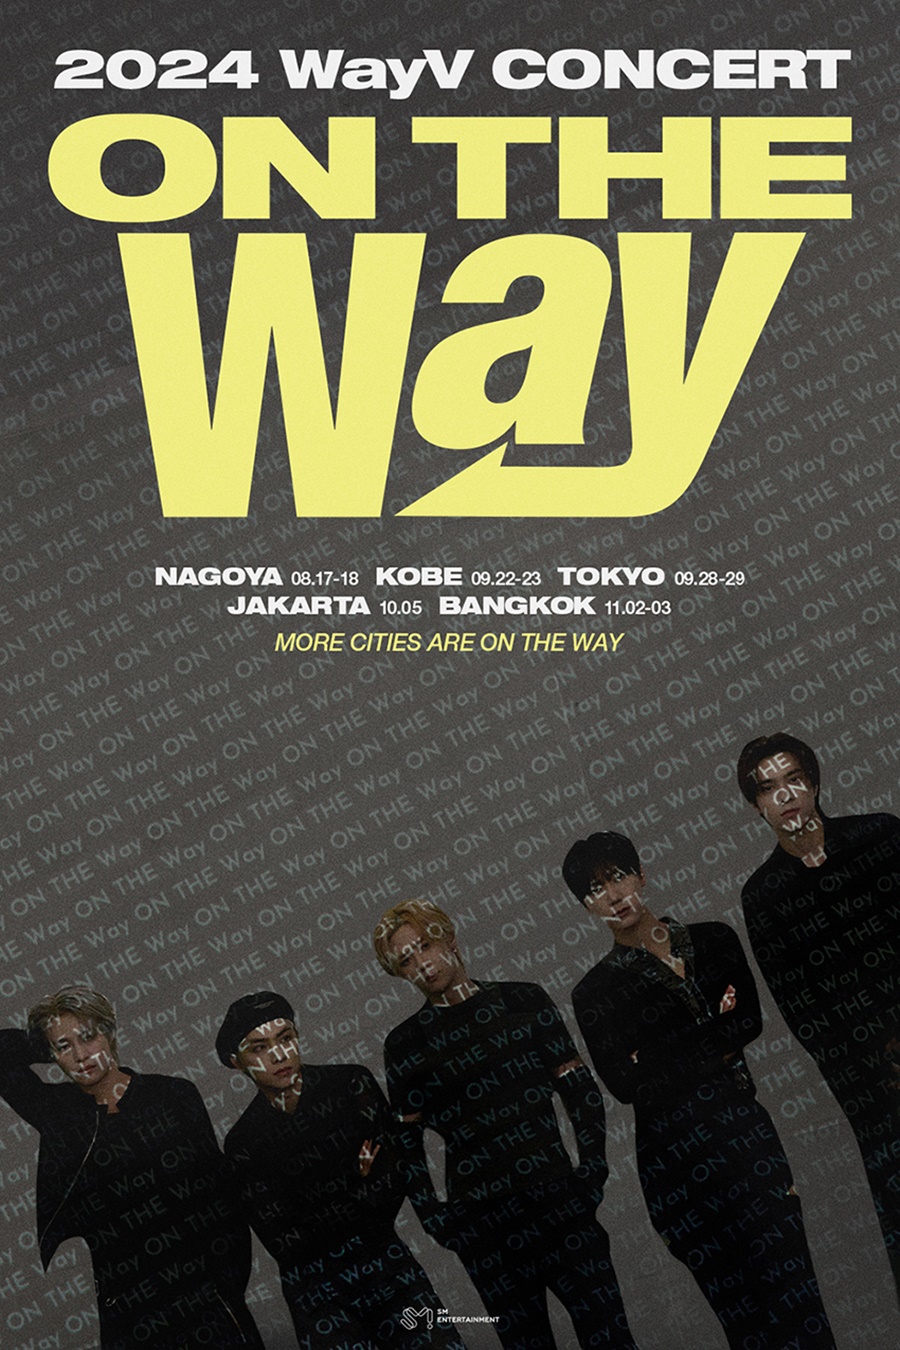 WayV, 첫 단독 콘서트 투어 개최…8월 日 나고야 공연으로 포문